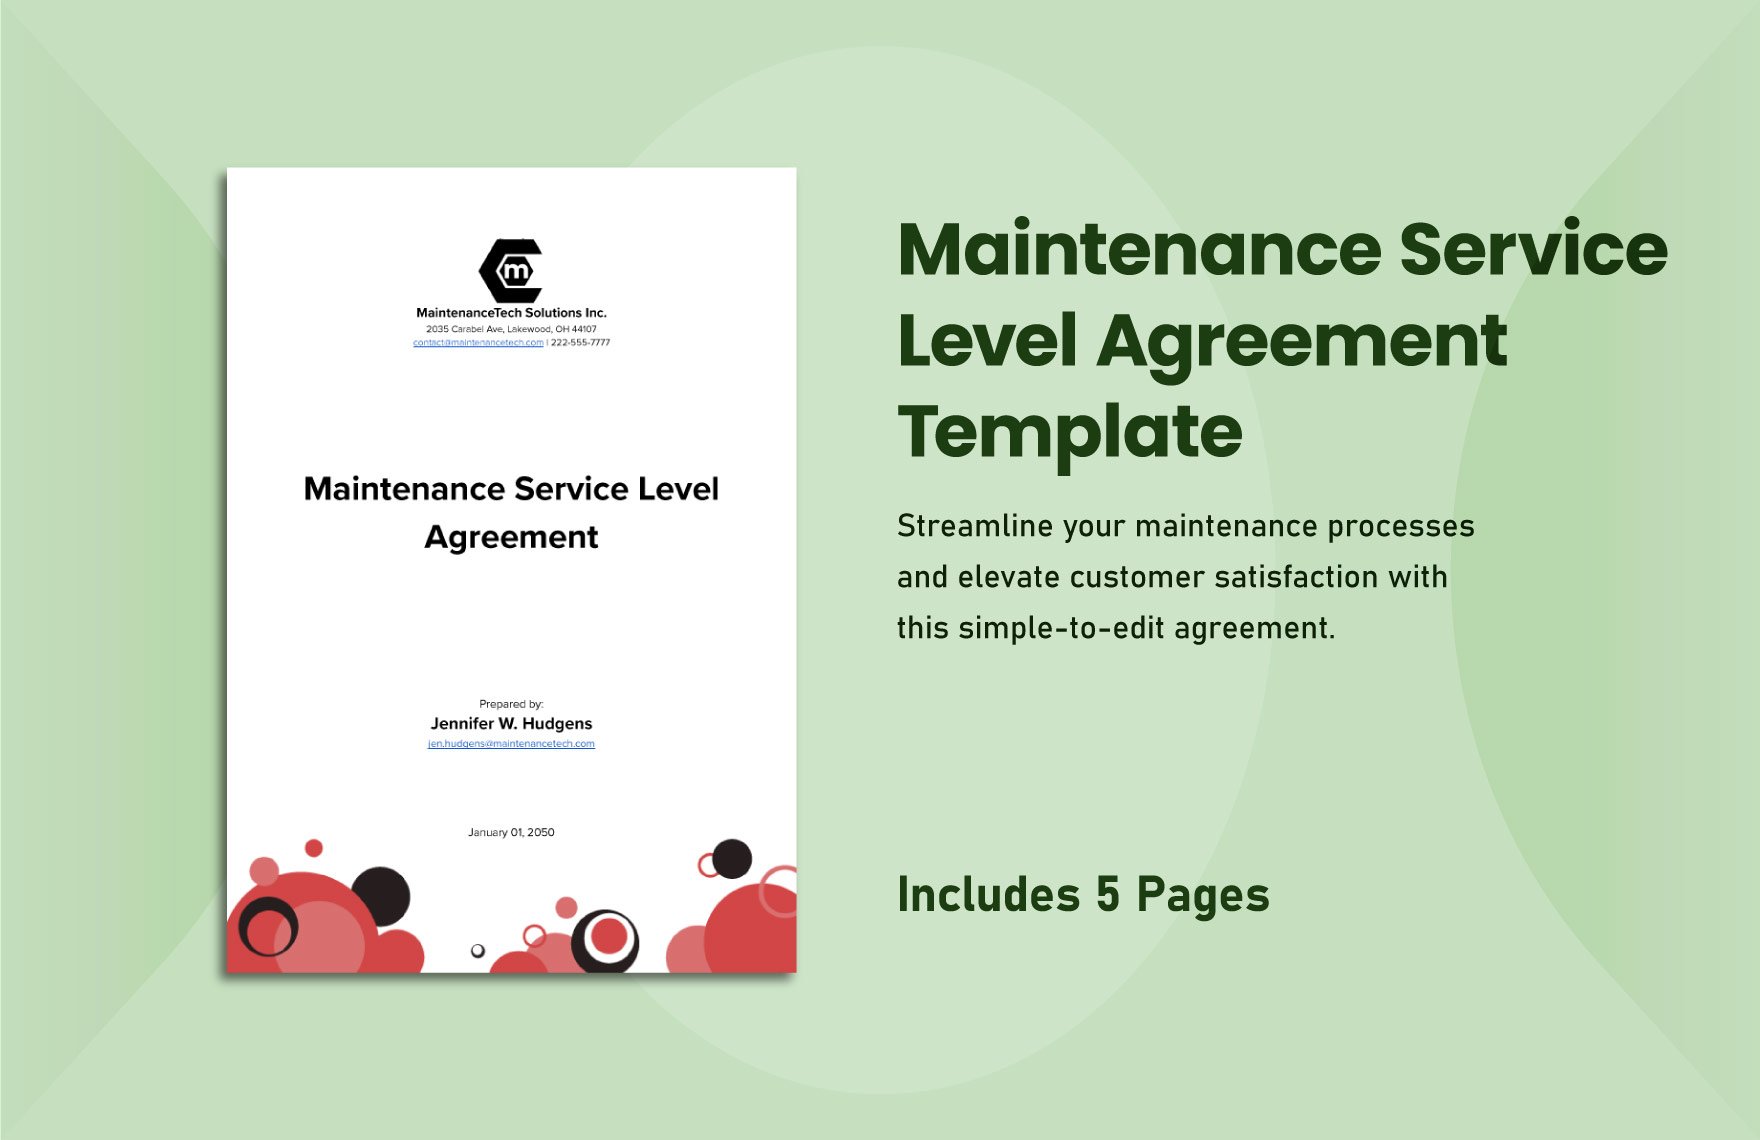 Maintenance Service Level Agreement Template